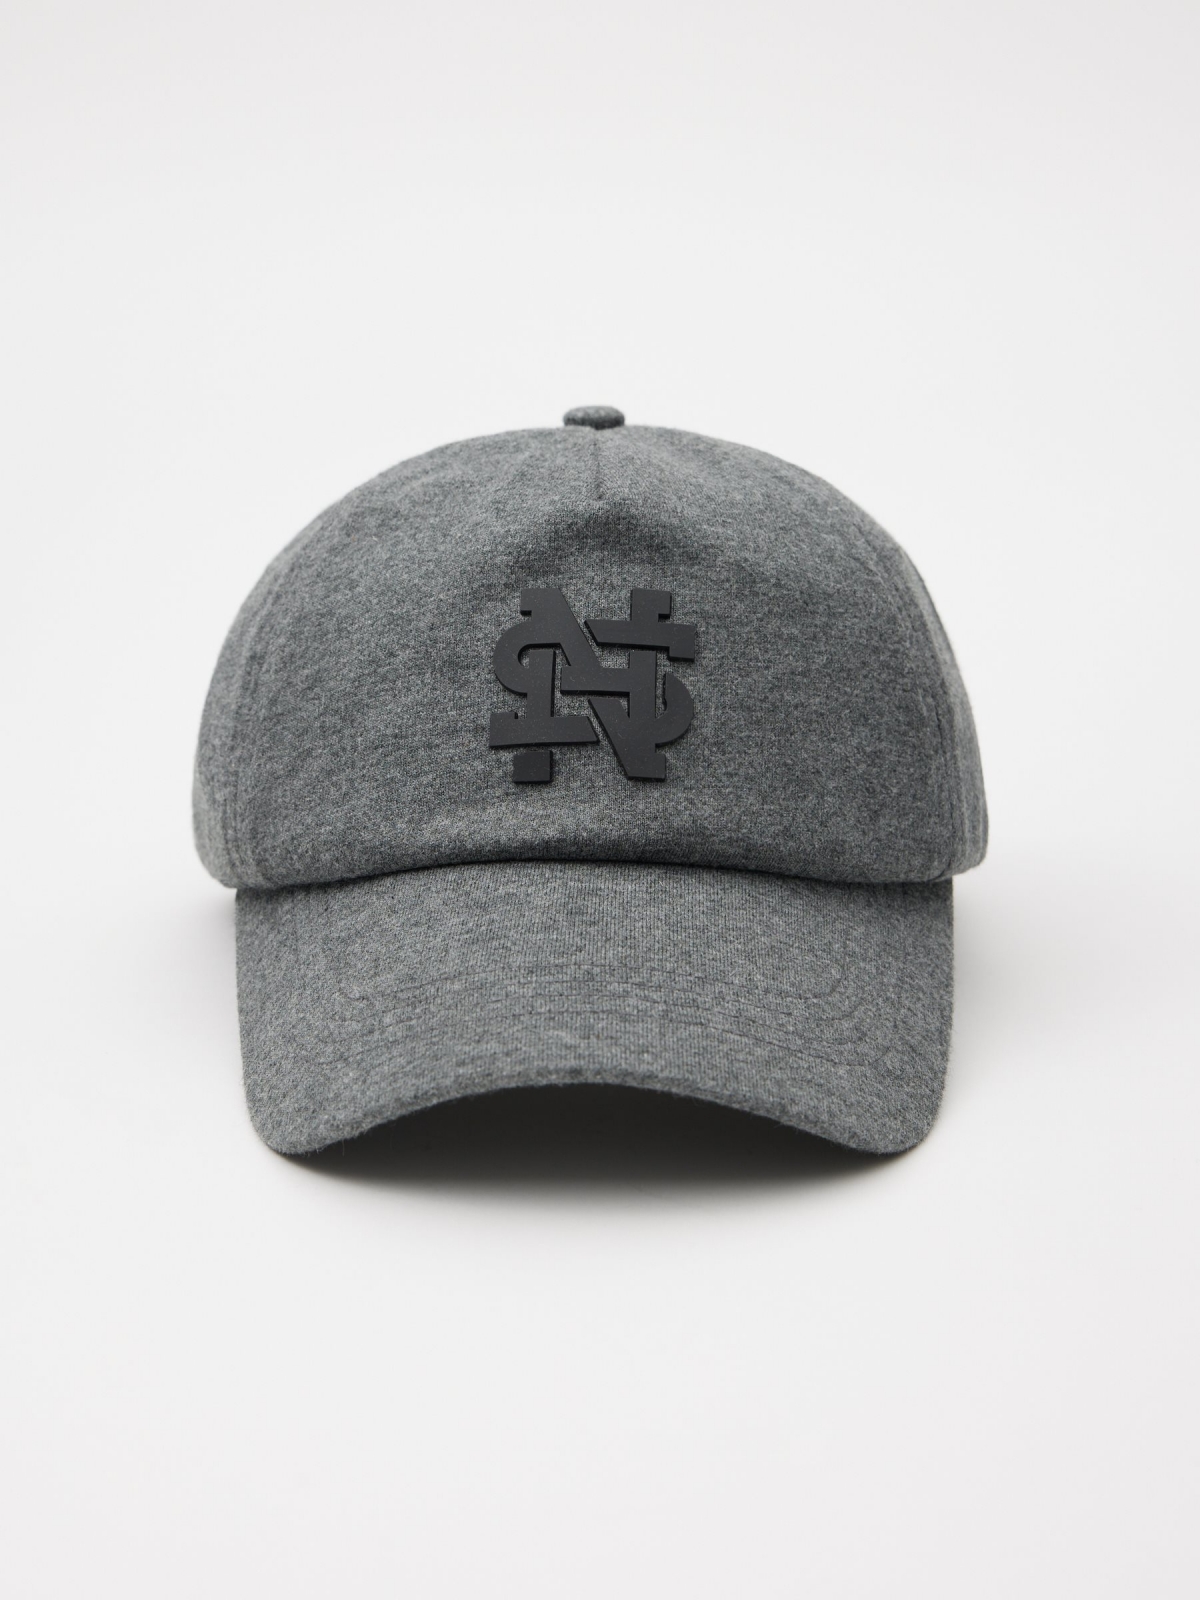 Baseball cap with logo melange grey